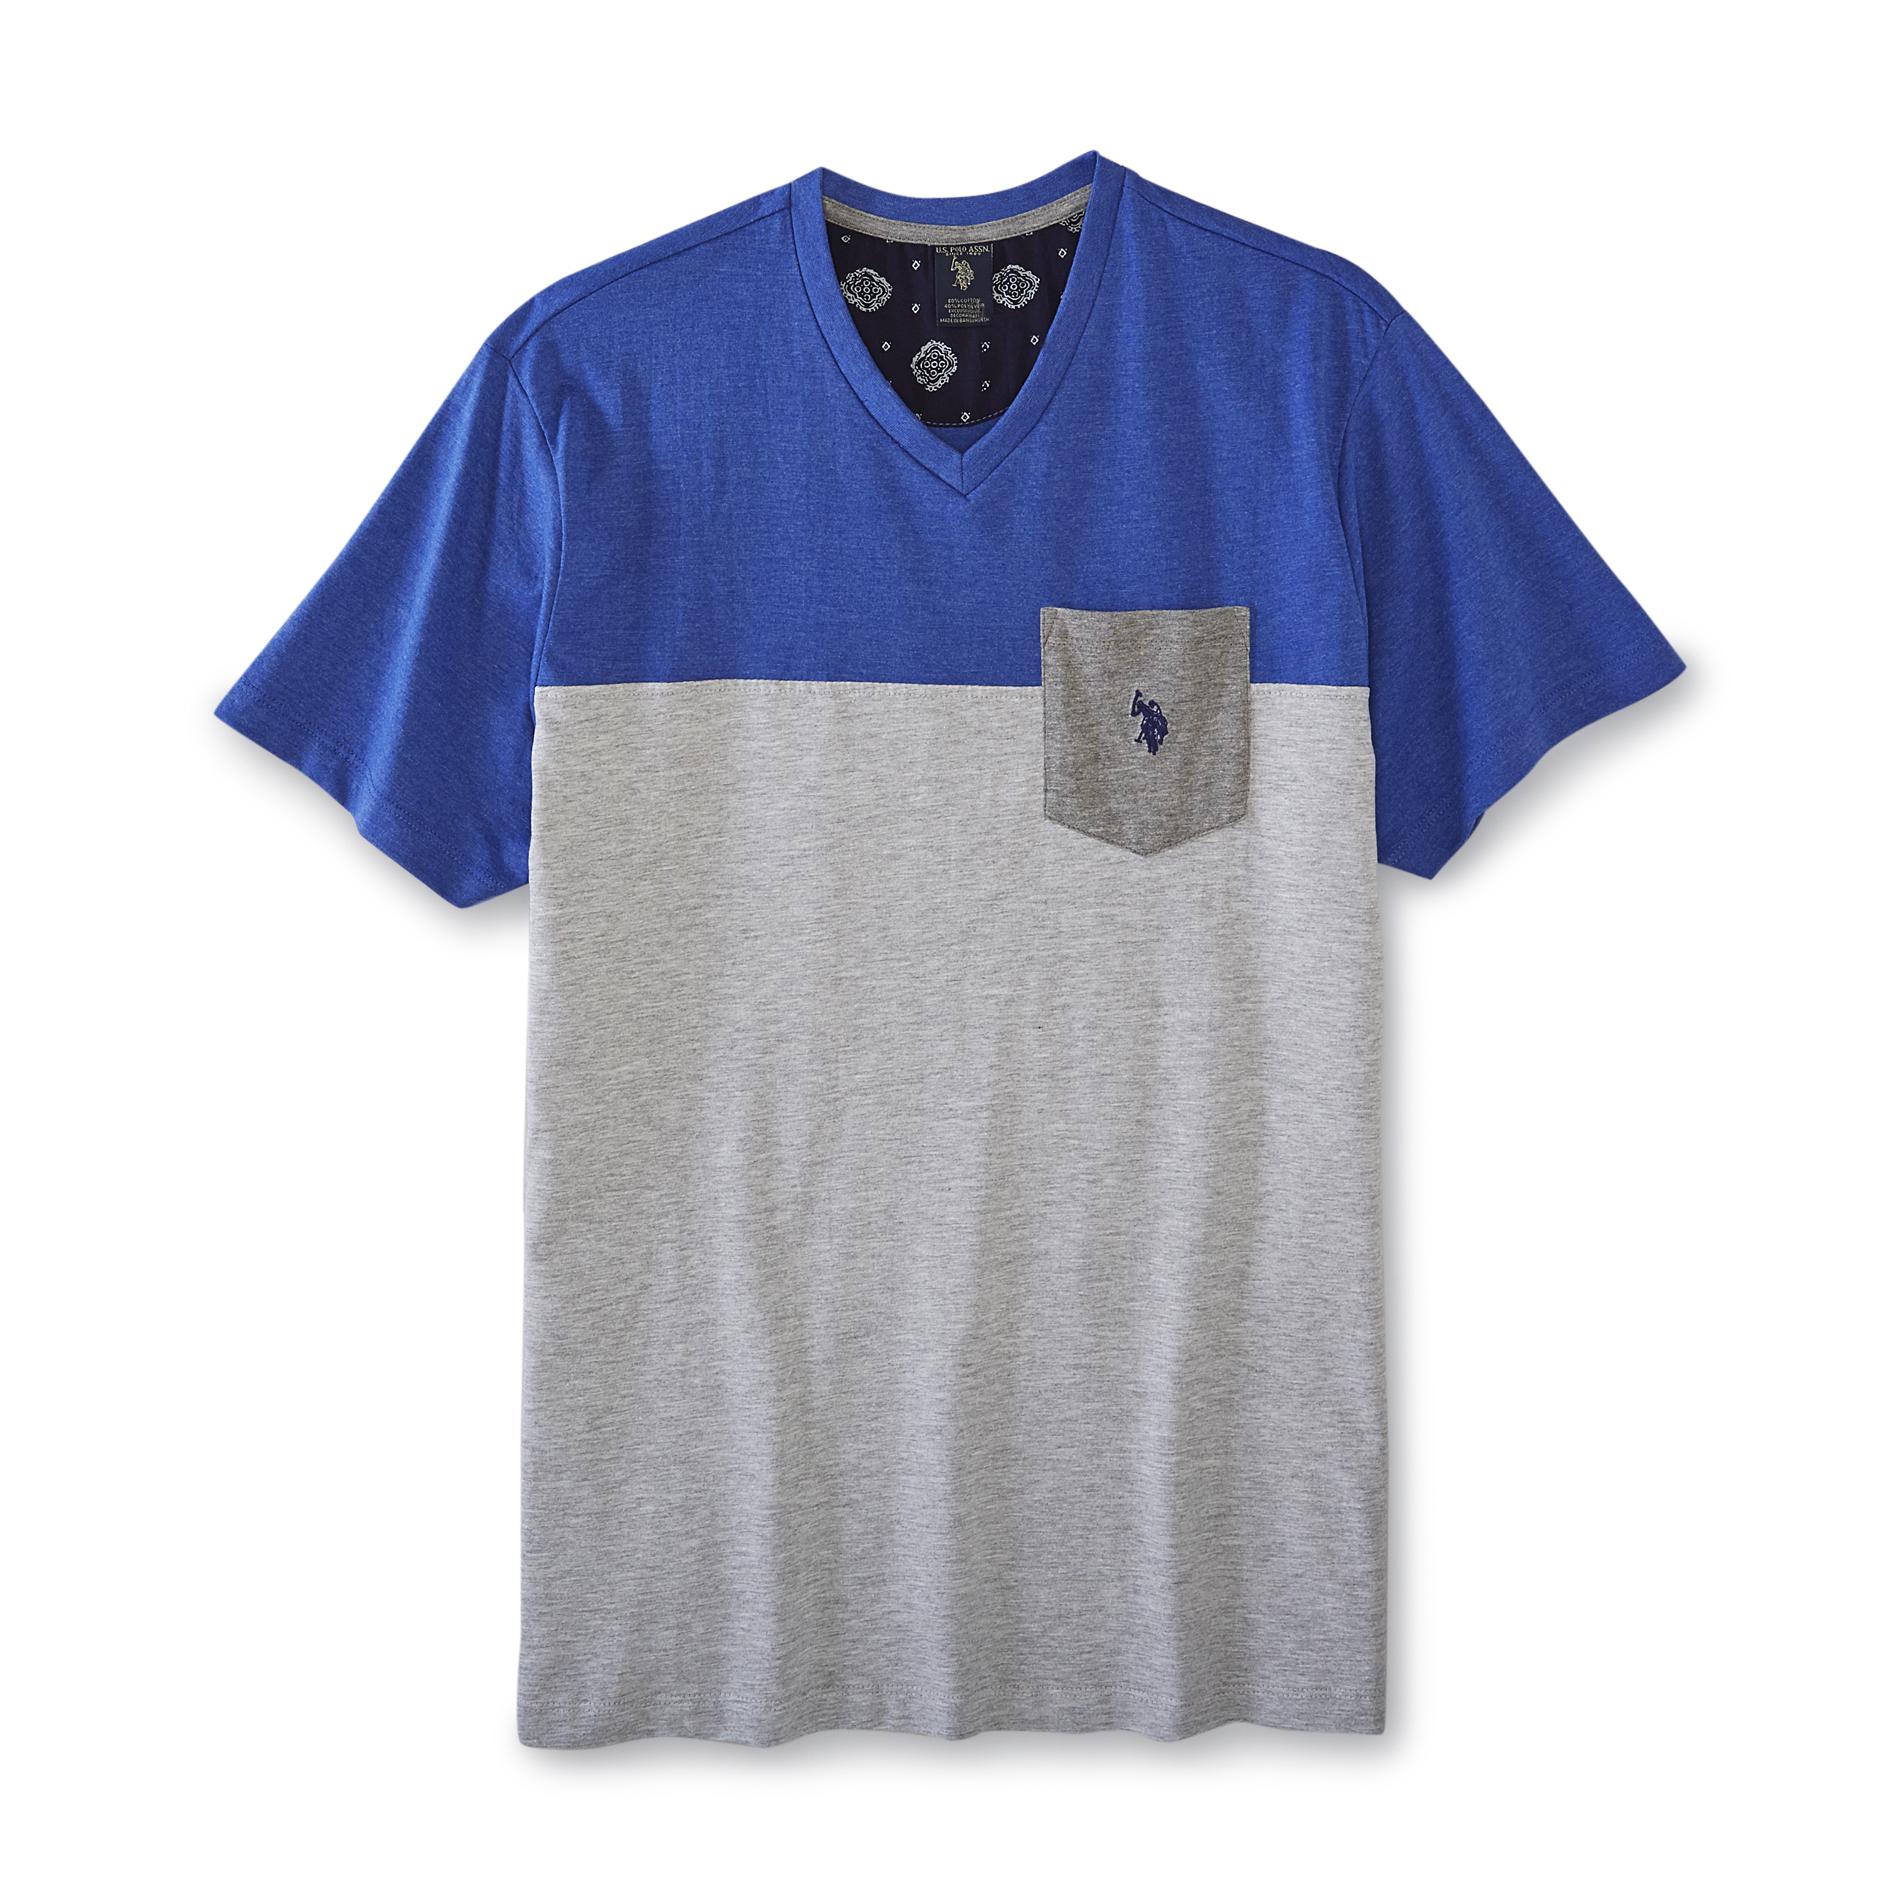 U.S. Polo Assn. Men's Colorblock Pocket T-Shirt